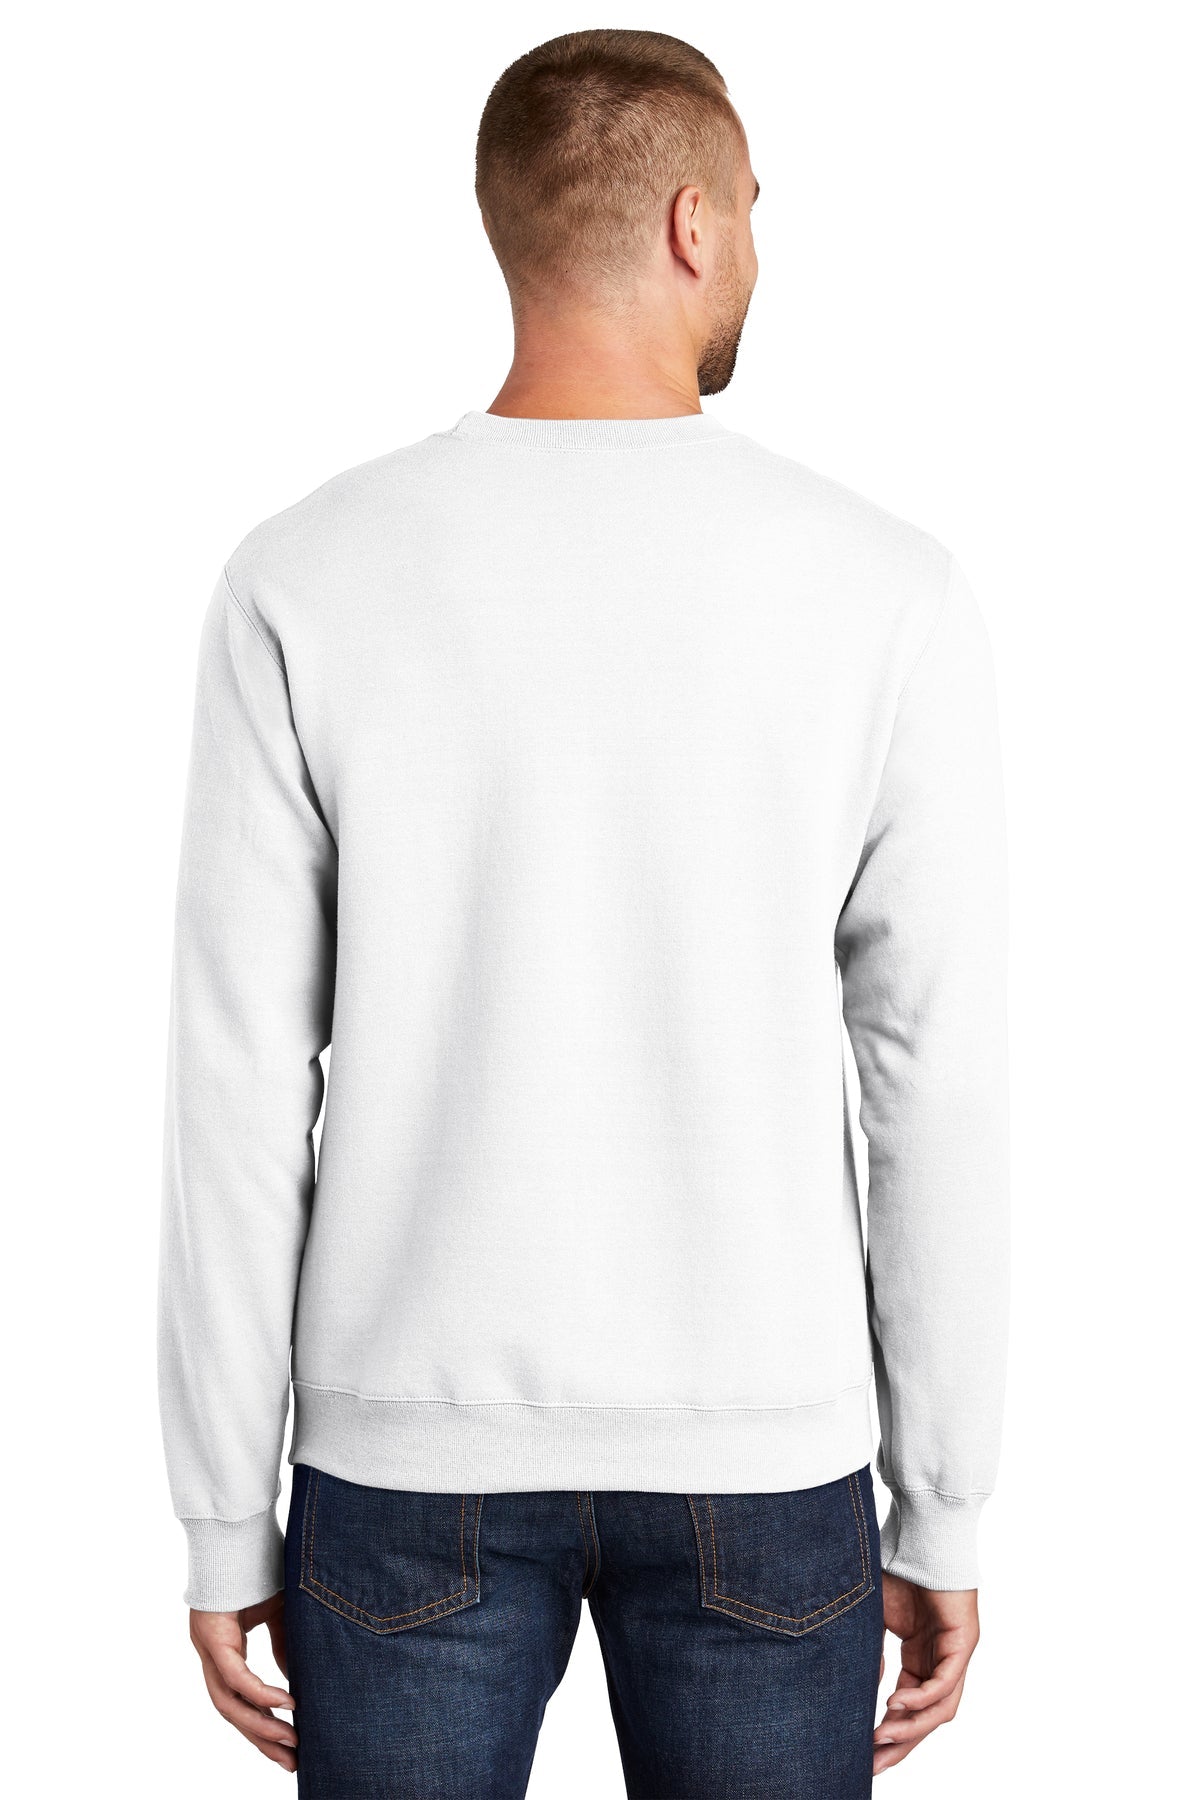 port & company_pc90 _white_company_logo_sweatshirts